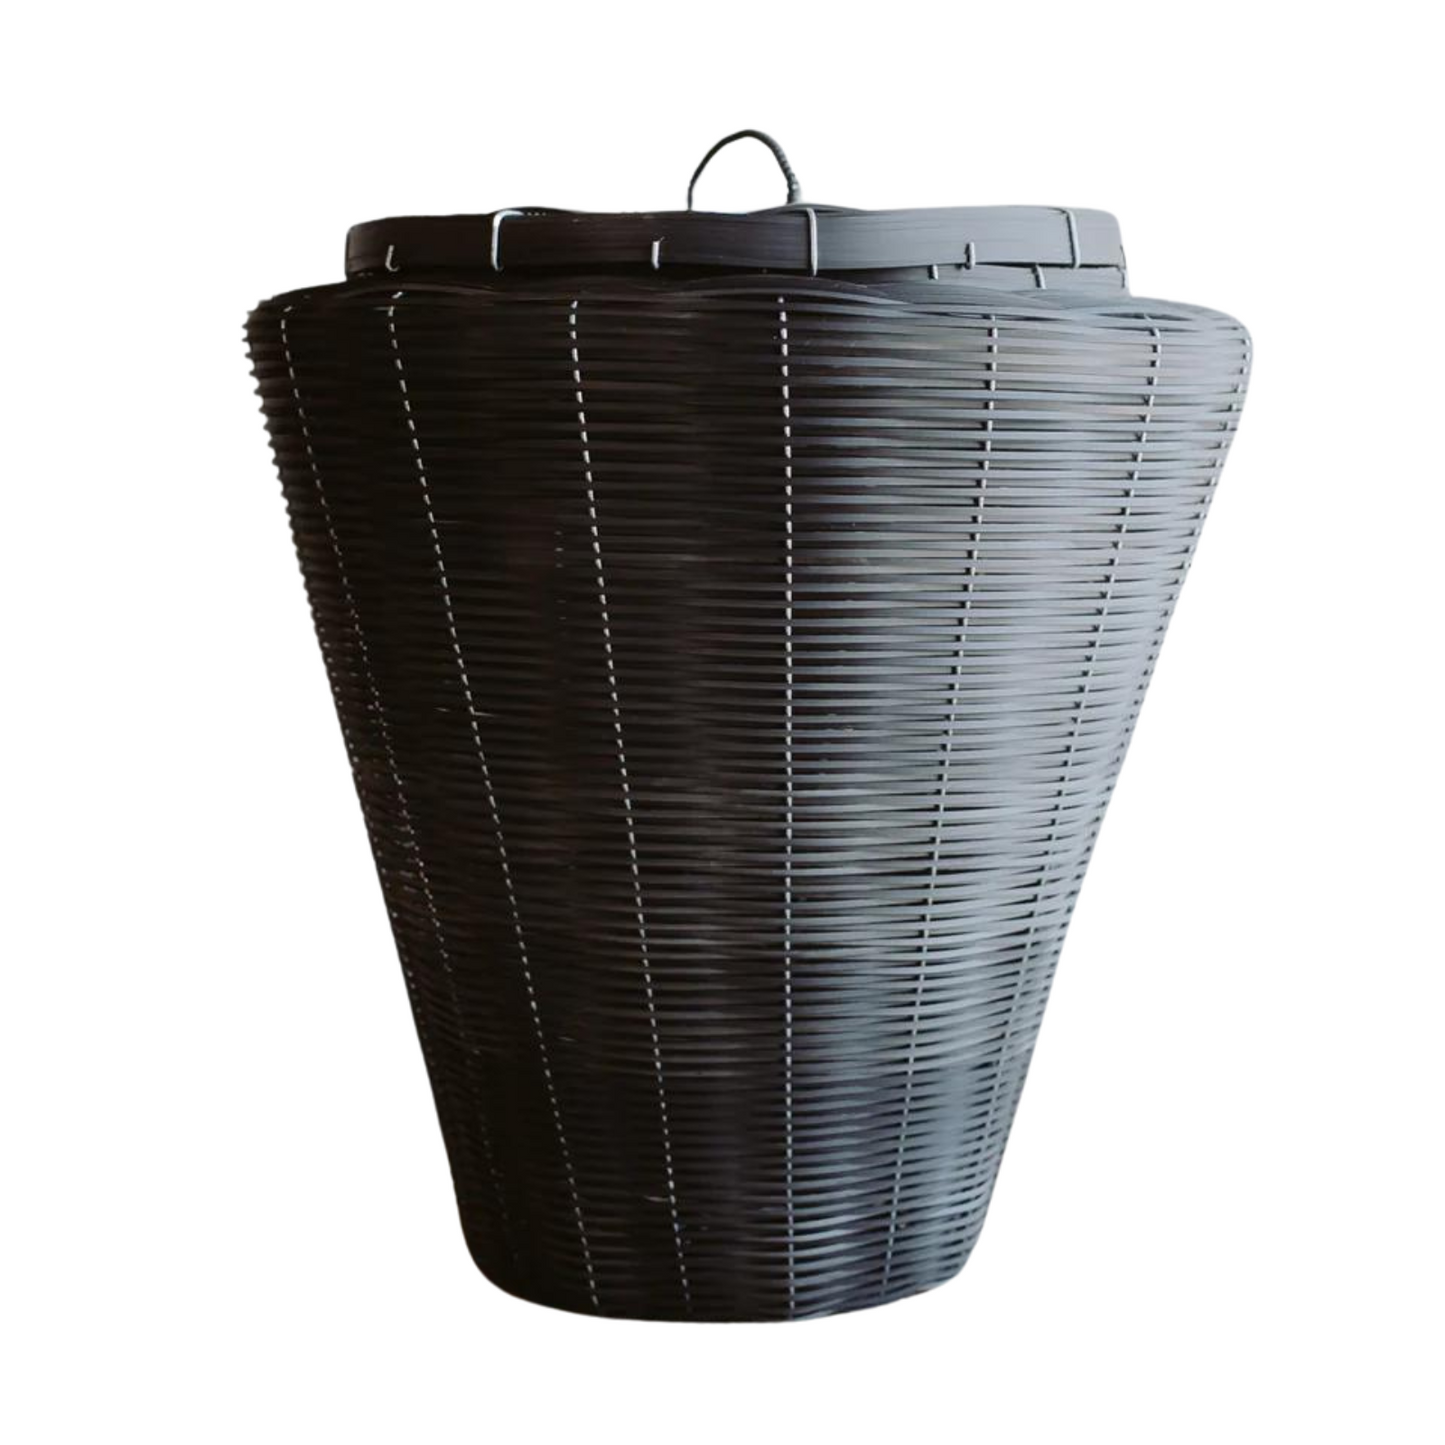 Recycled PVC Laundry Basket